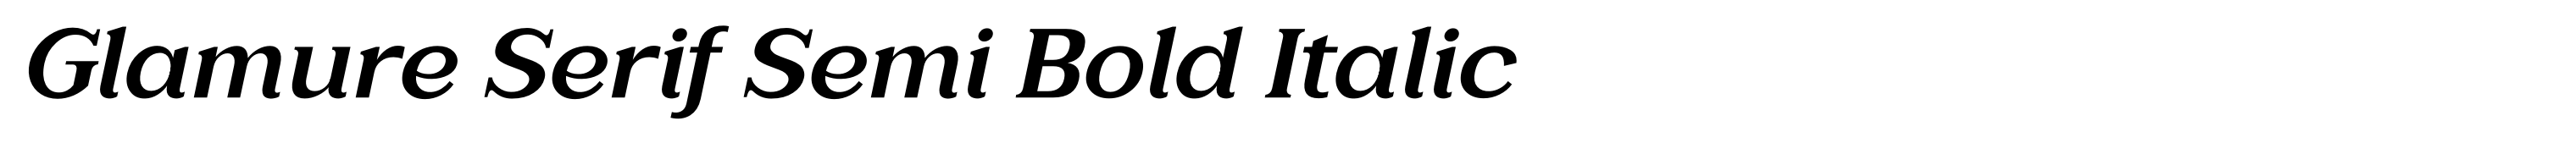 Glamure Serif Semi Bold Italic